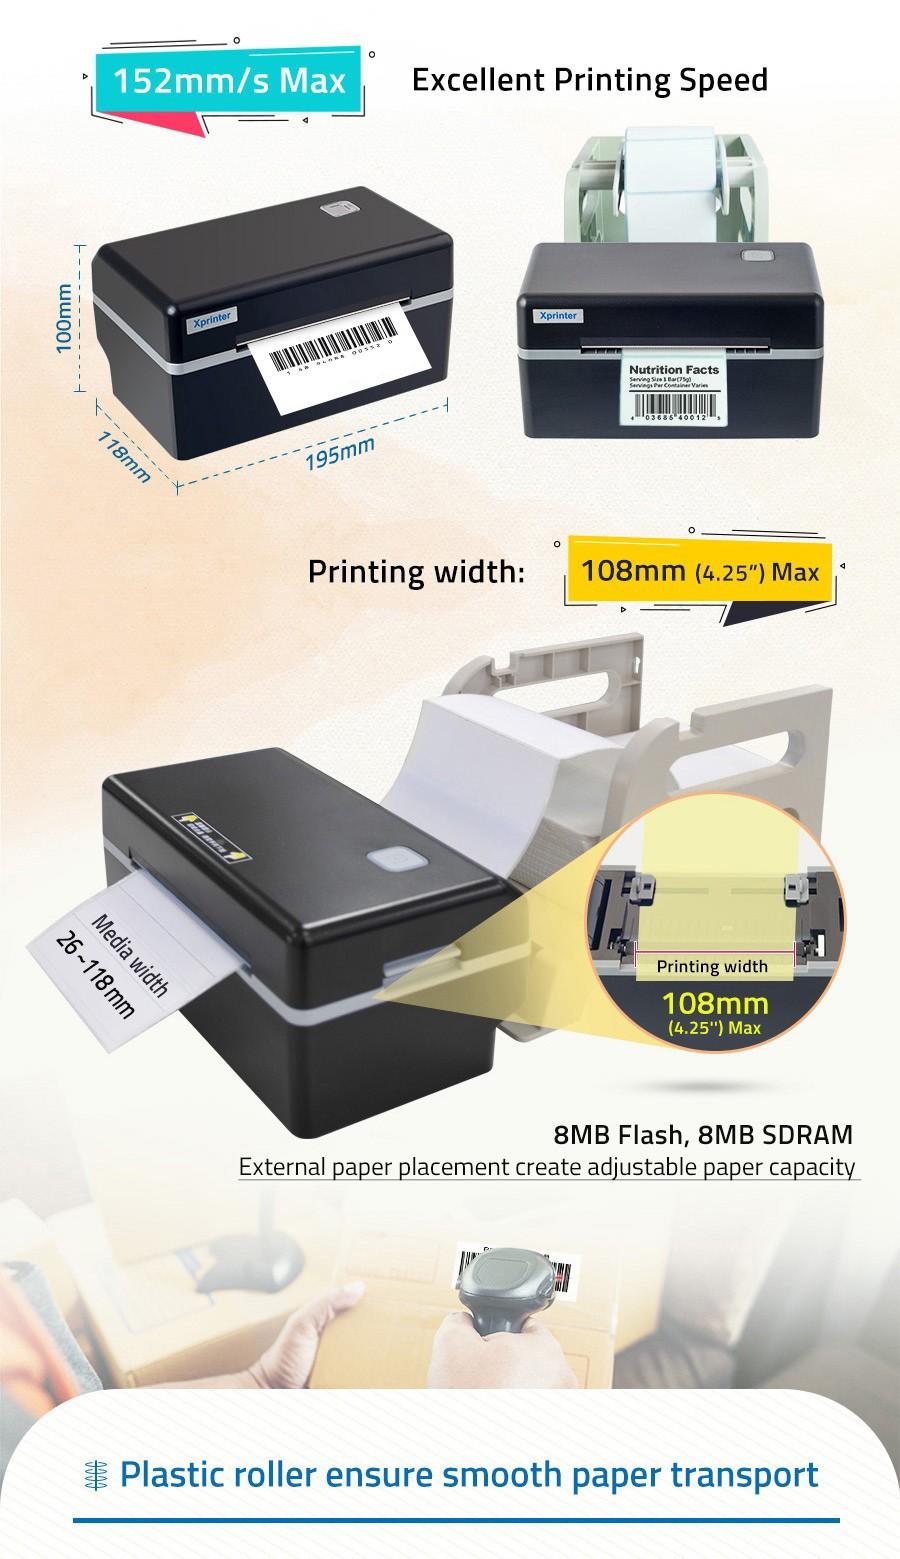 Xprinter dircet thermal bluetooth credit card receipt printer customized for supermarket